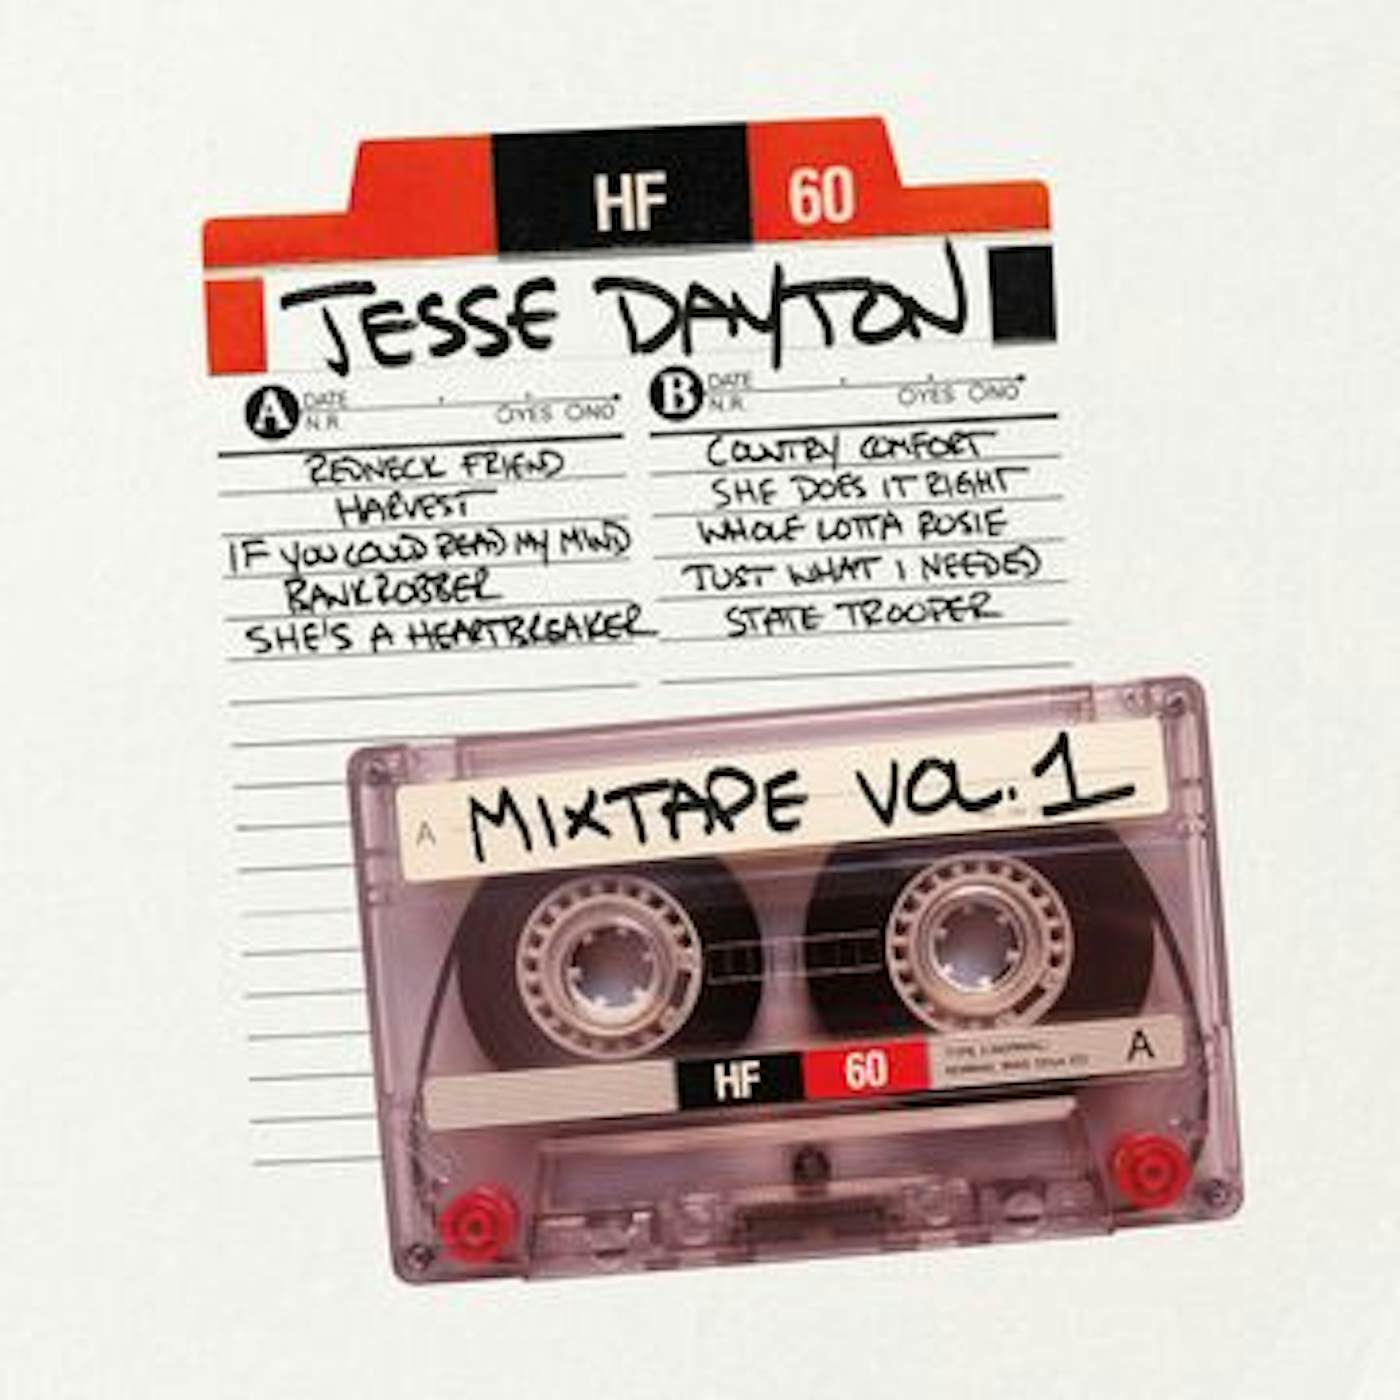 Jesse Dayton Mixtape Volume 1 CD